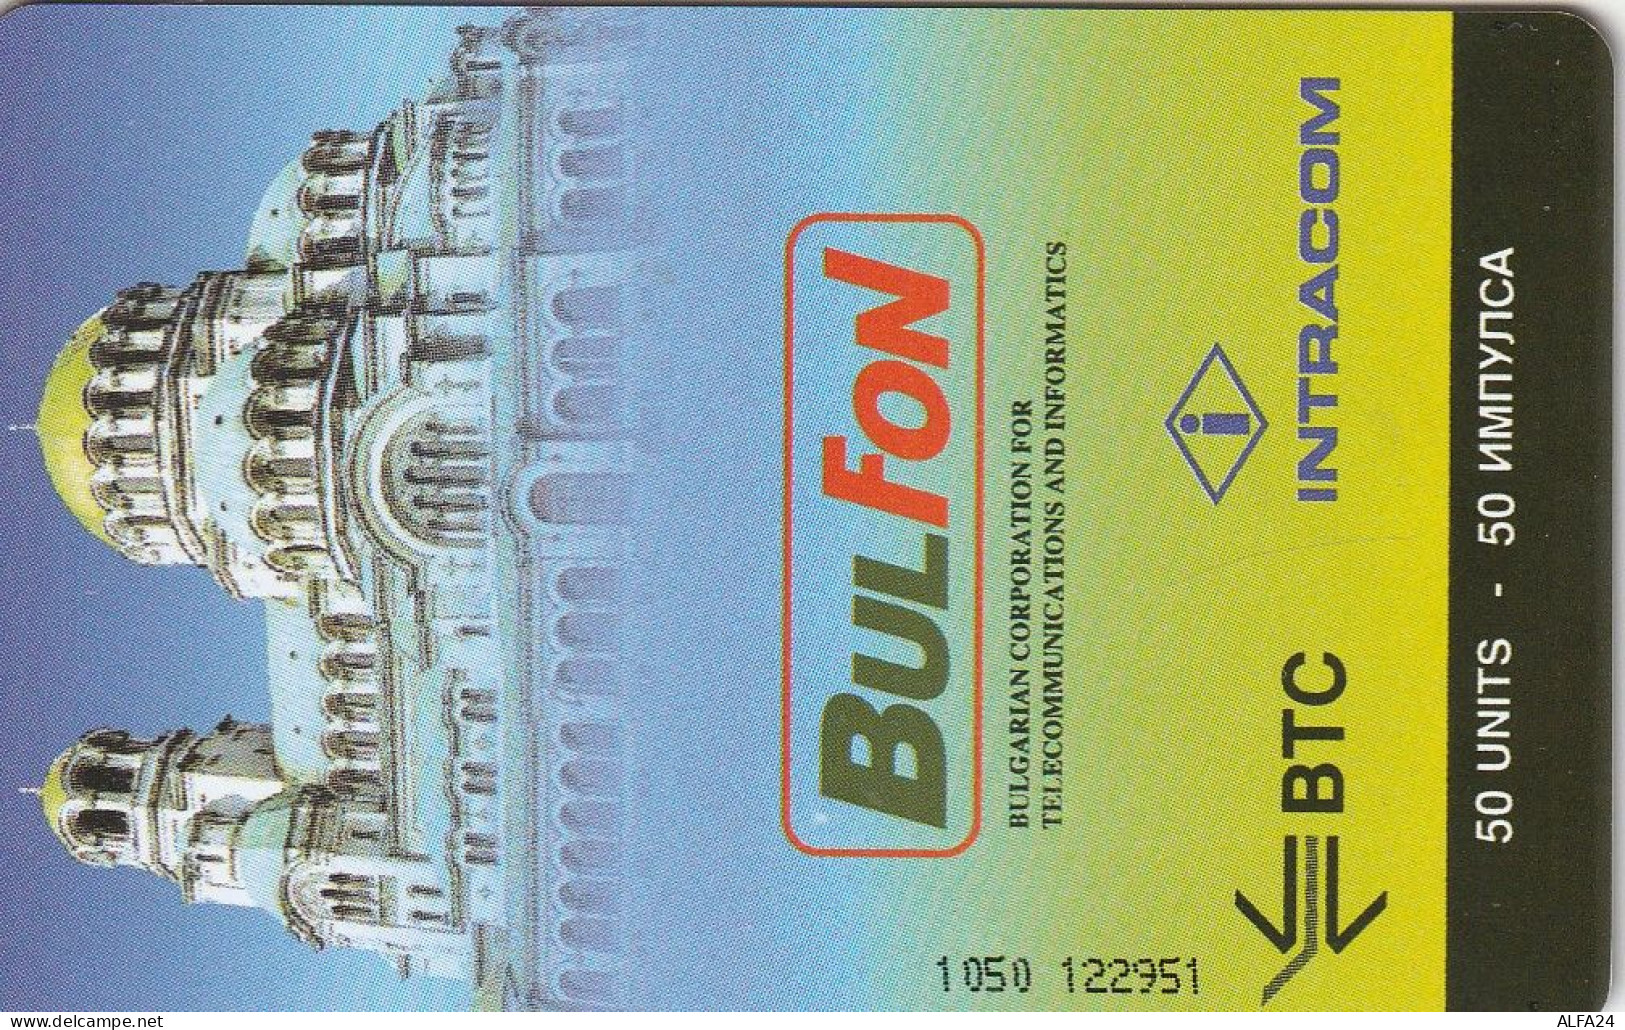 PHONE CARD BULGARIA  (E4.22.7 - Bulgarie